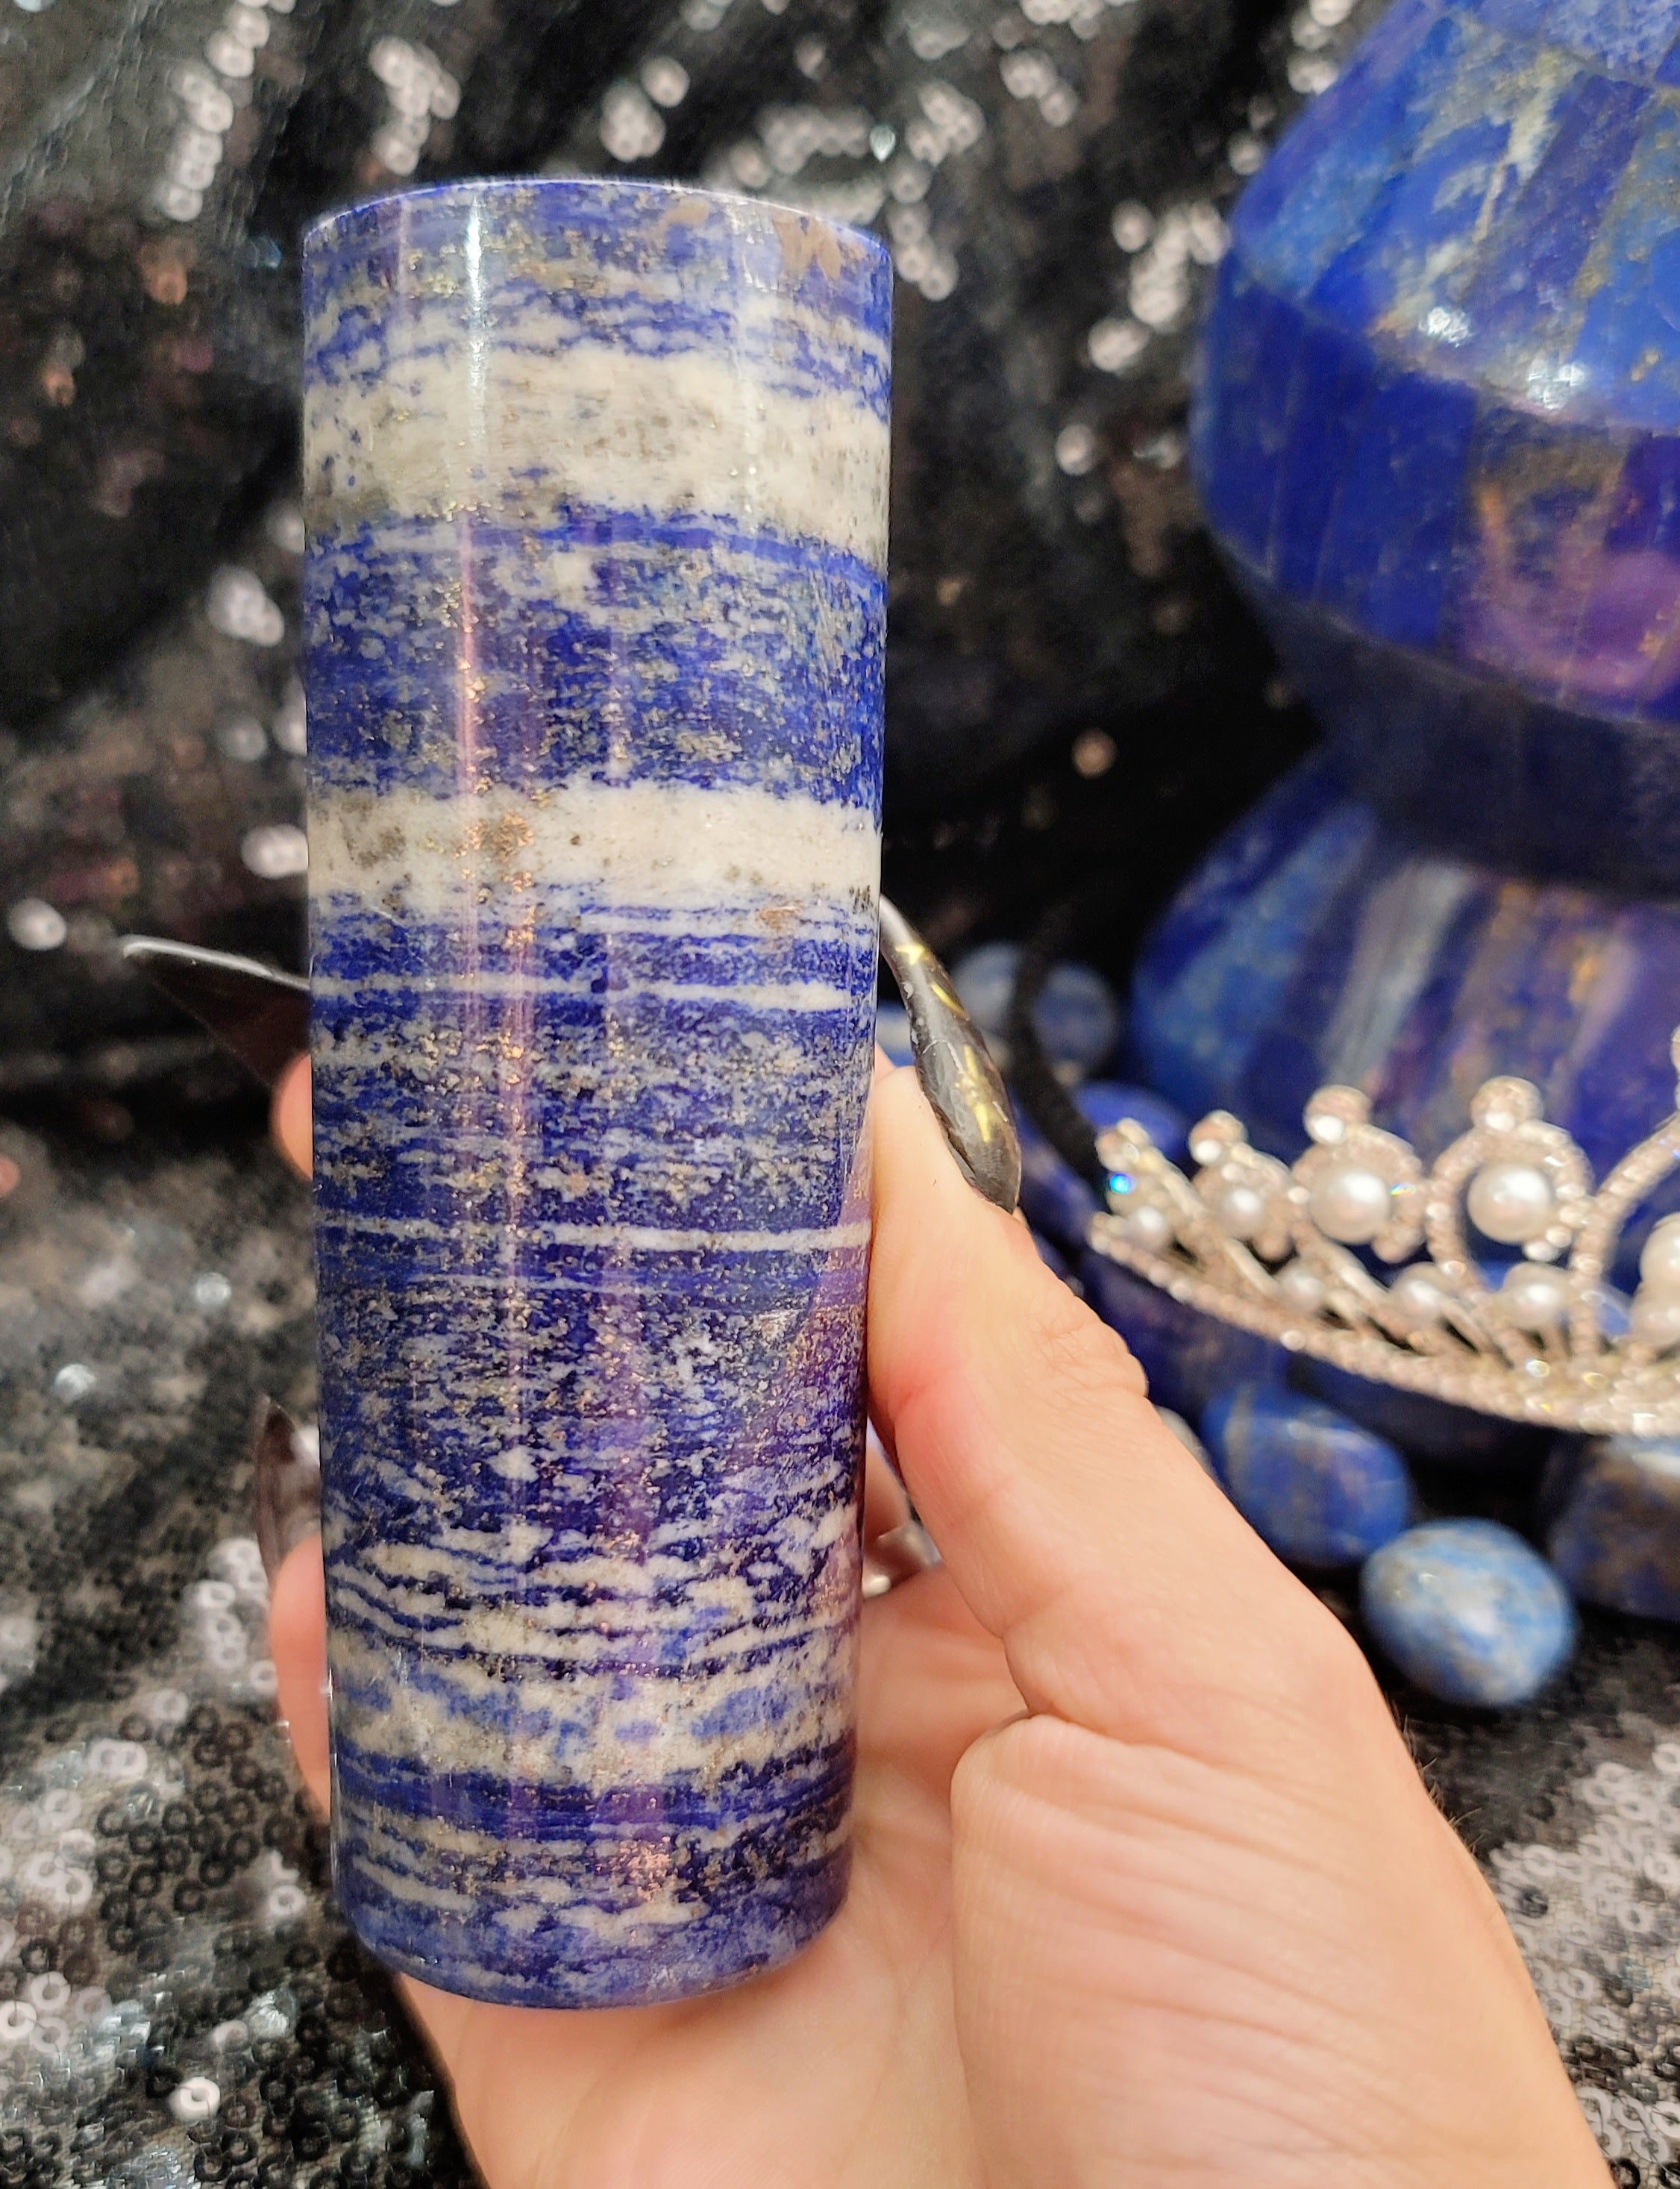 Lapis Lazuli Harmonizer for Confidence and Inner power.